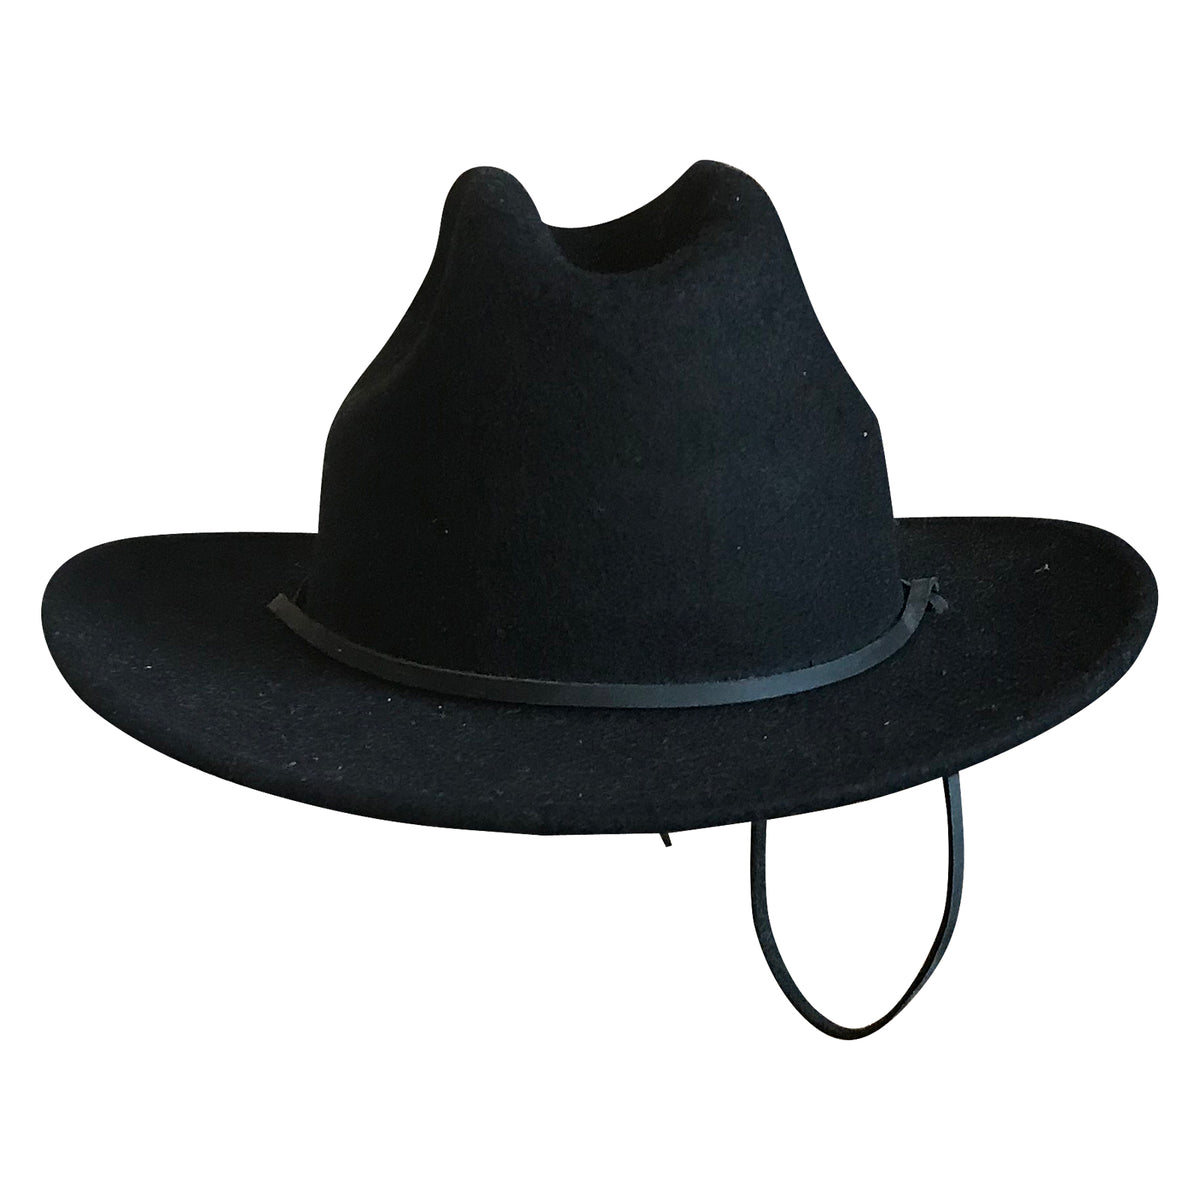 Sierra Ultra-Felt Blaze Orange Western Cowboy Hat - Sm/Med